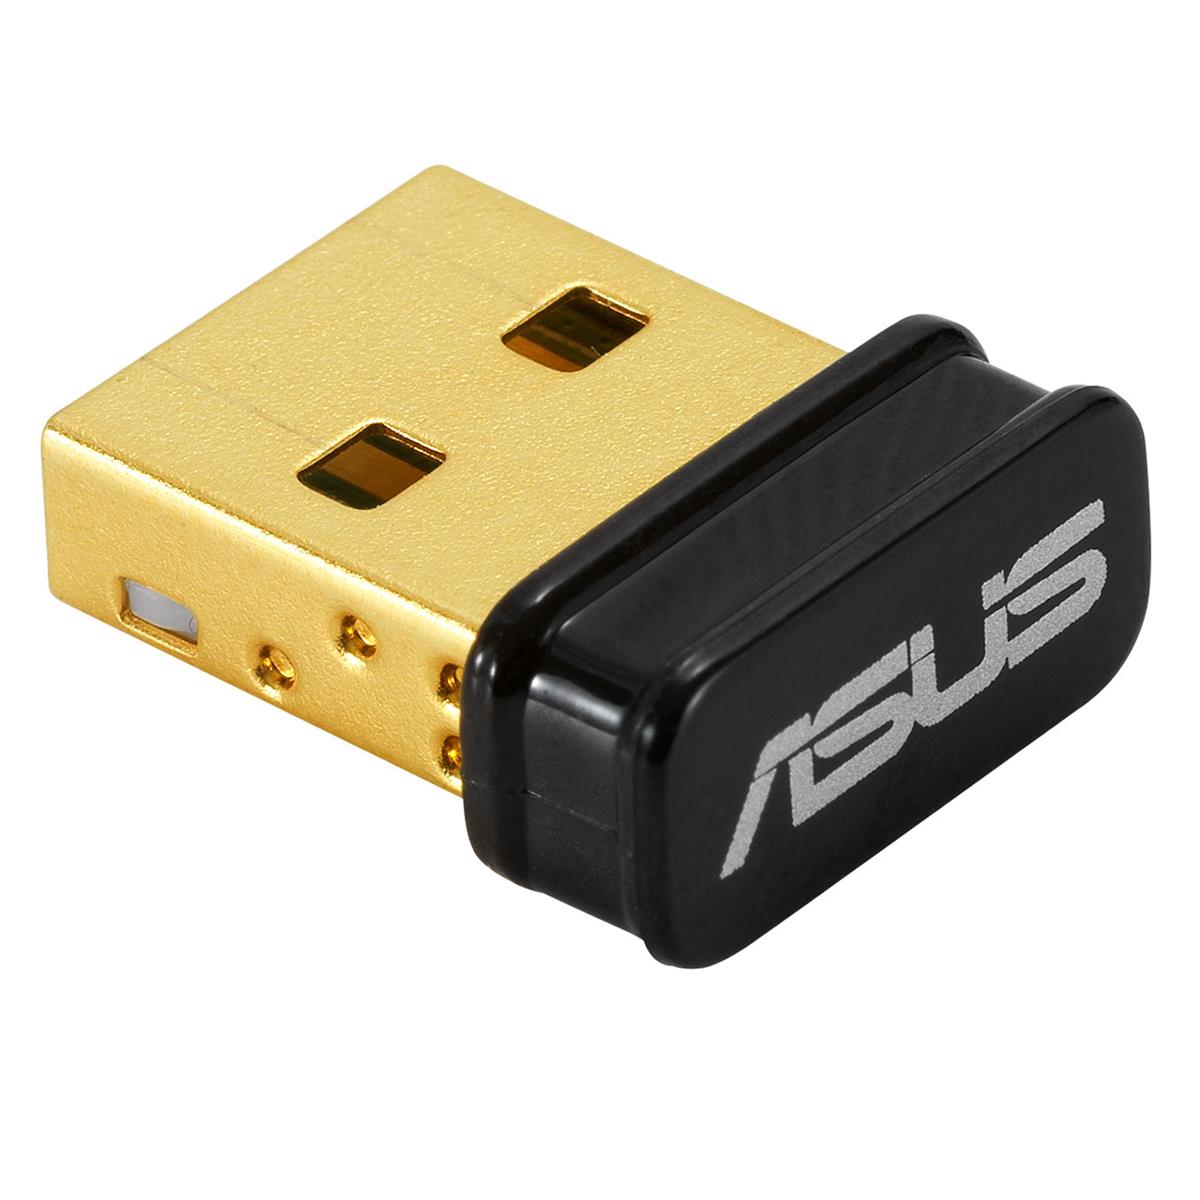 Image of ASUS USB-BT500 Bluetooth 5.0 USB Adapter